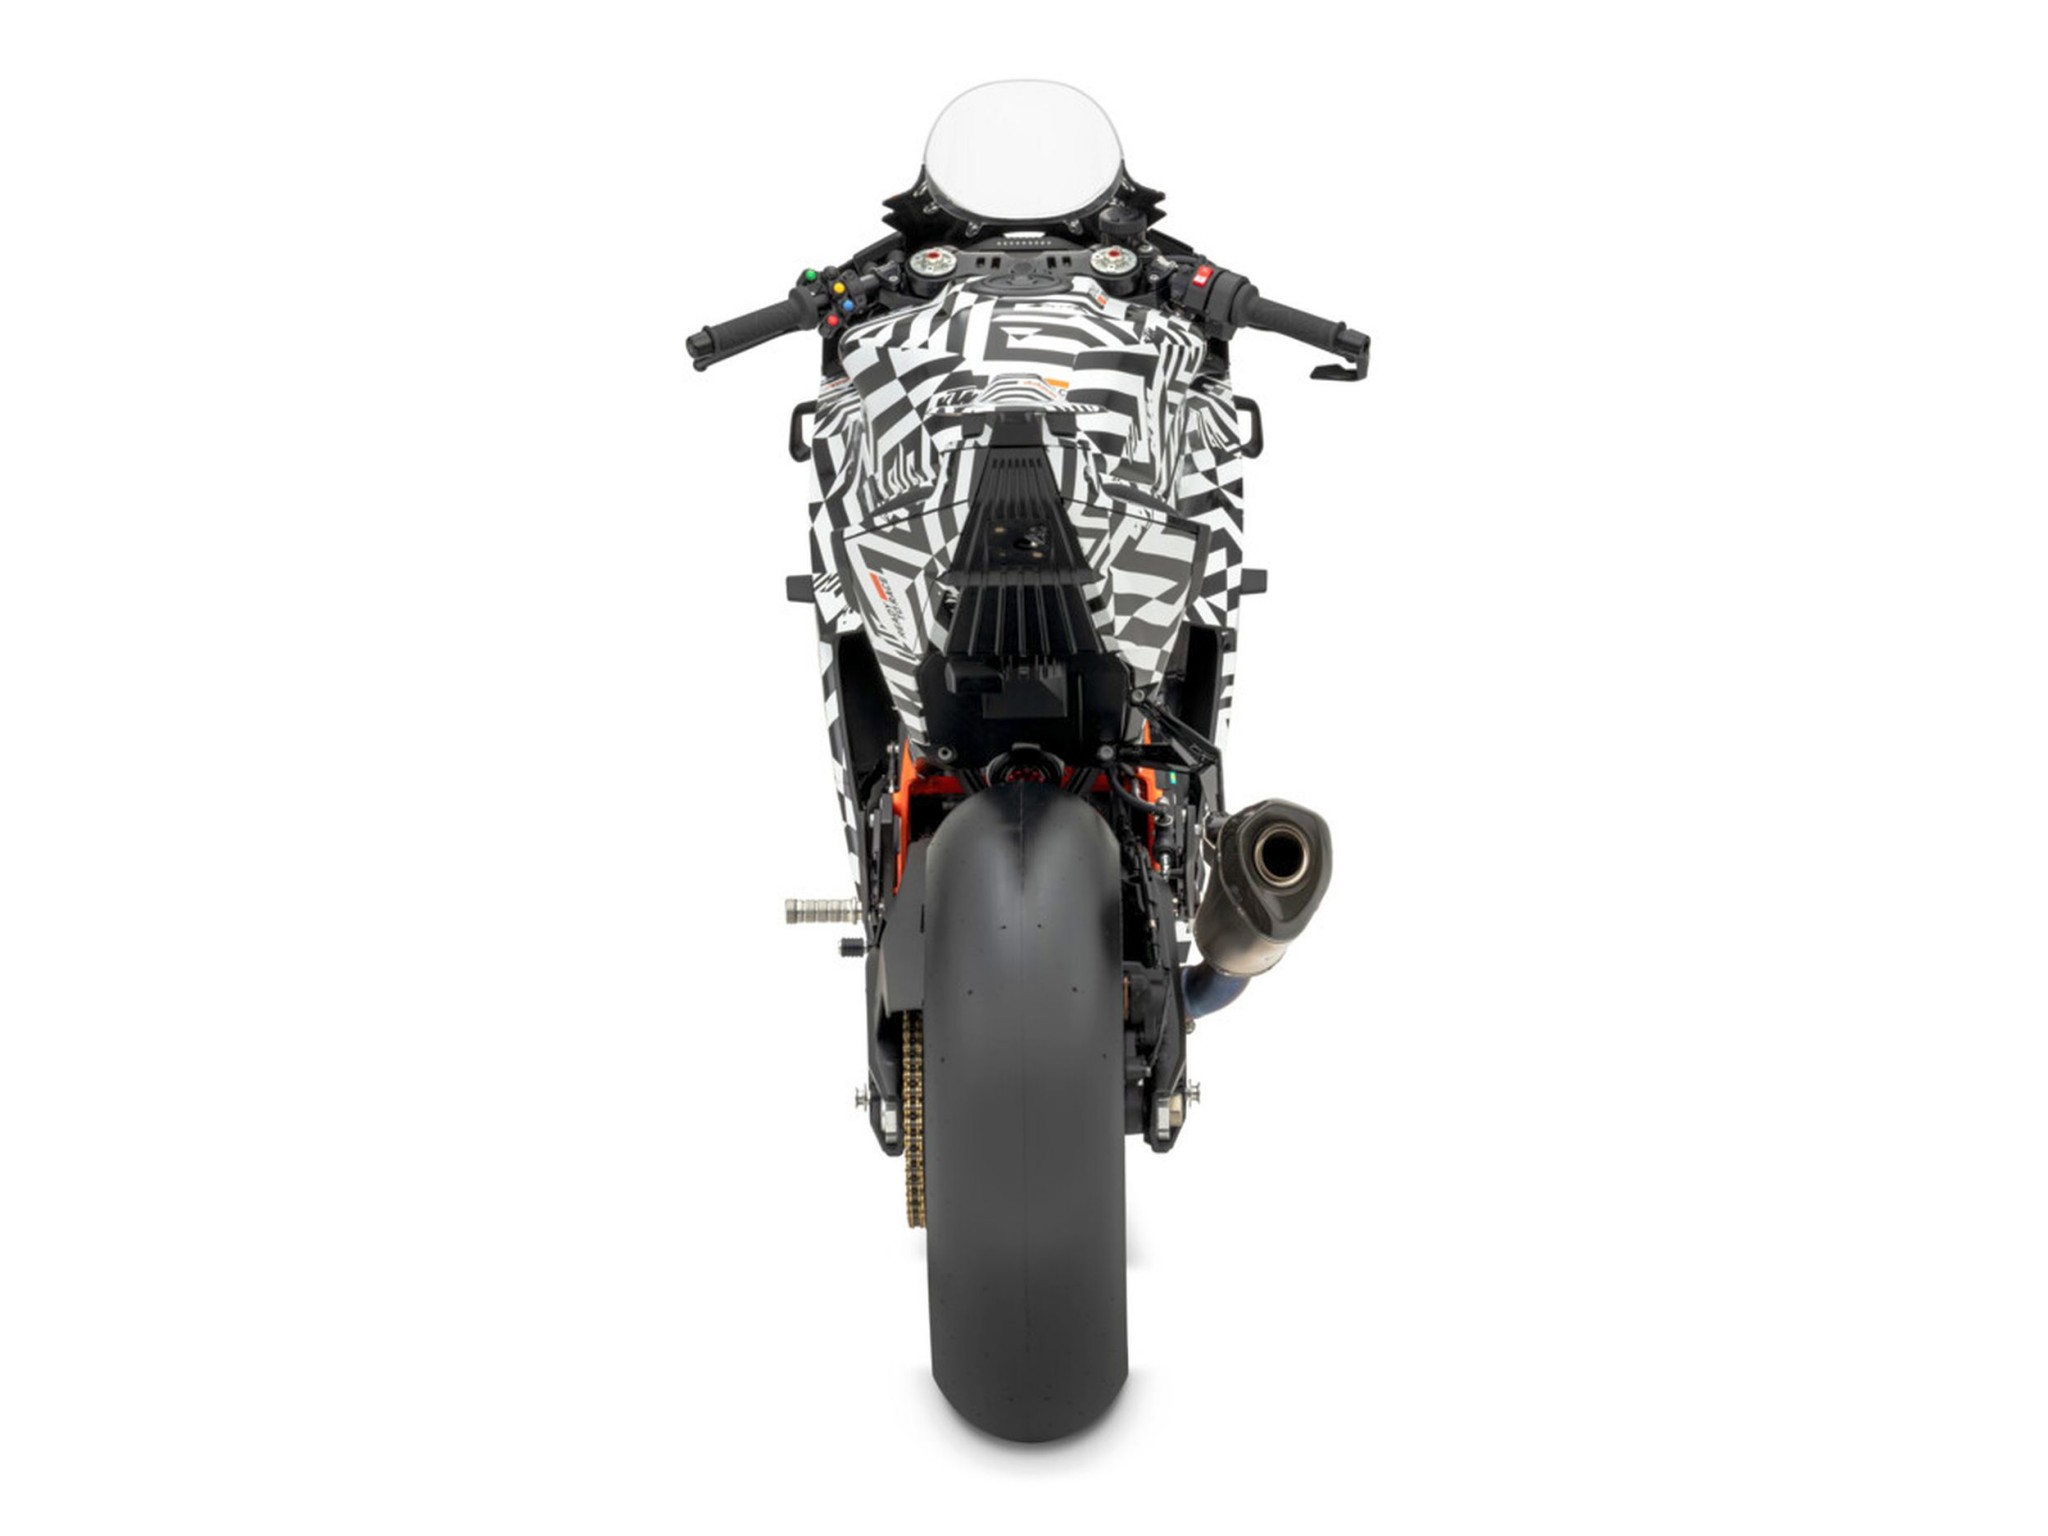 KTM 990 RC R: ¡por fin la moto deportiva de pura sangre para la carretera! - Imagen 53